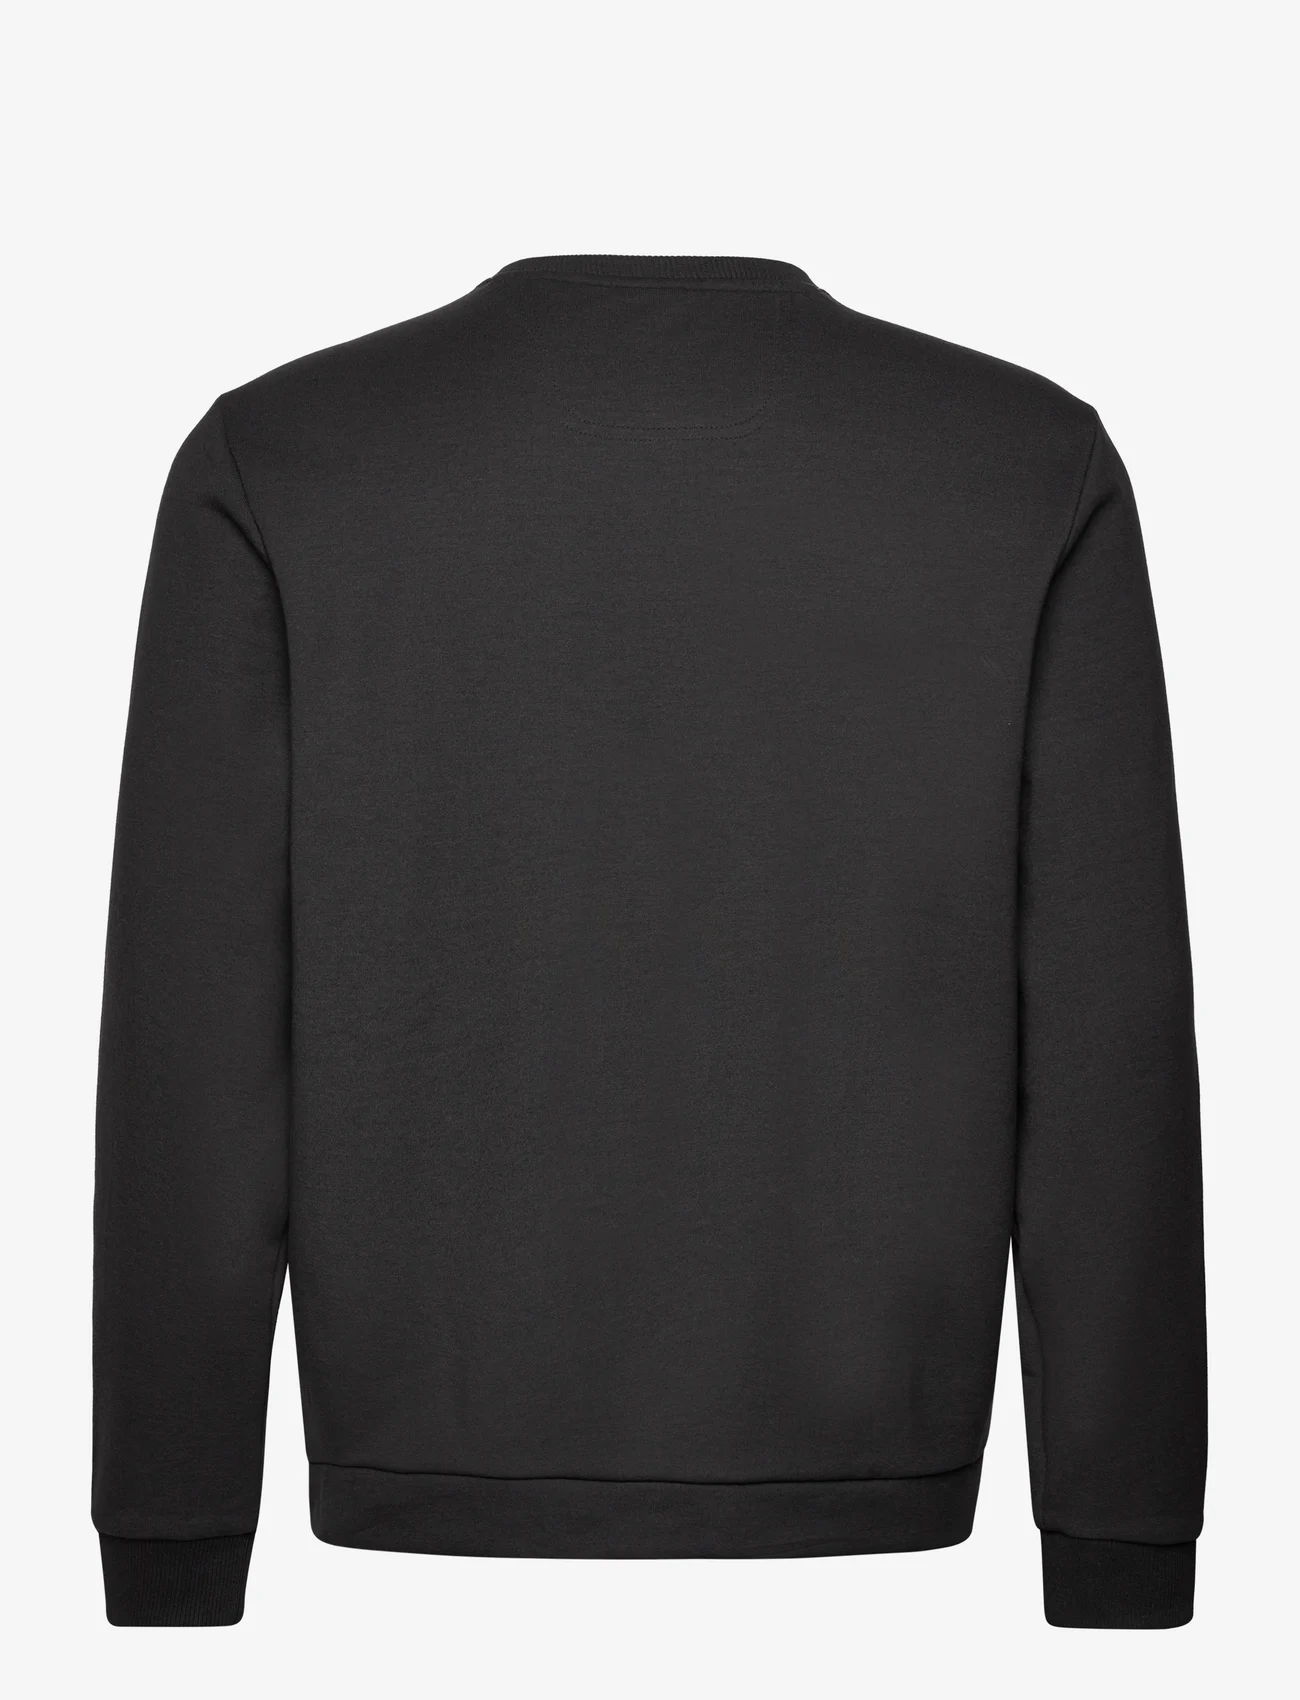 BOSS - Salbeos 1 - sweatshirts - black - 1